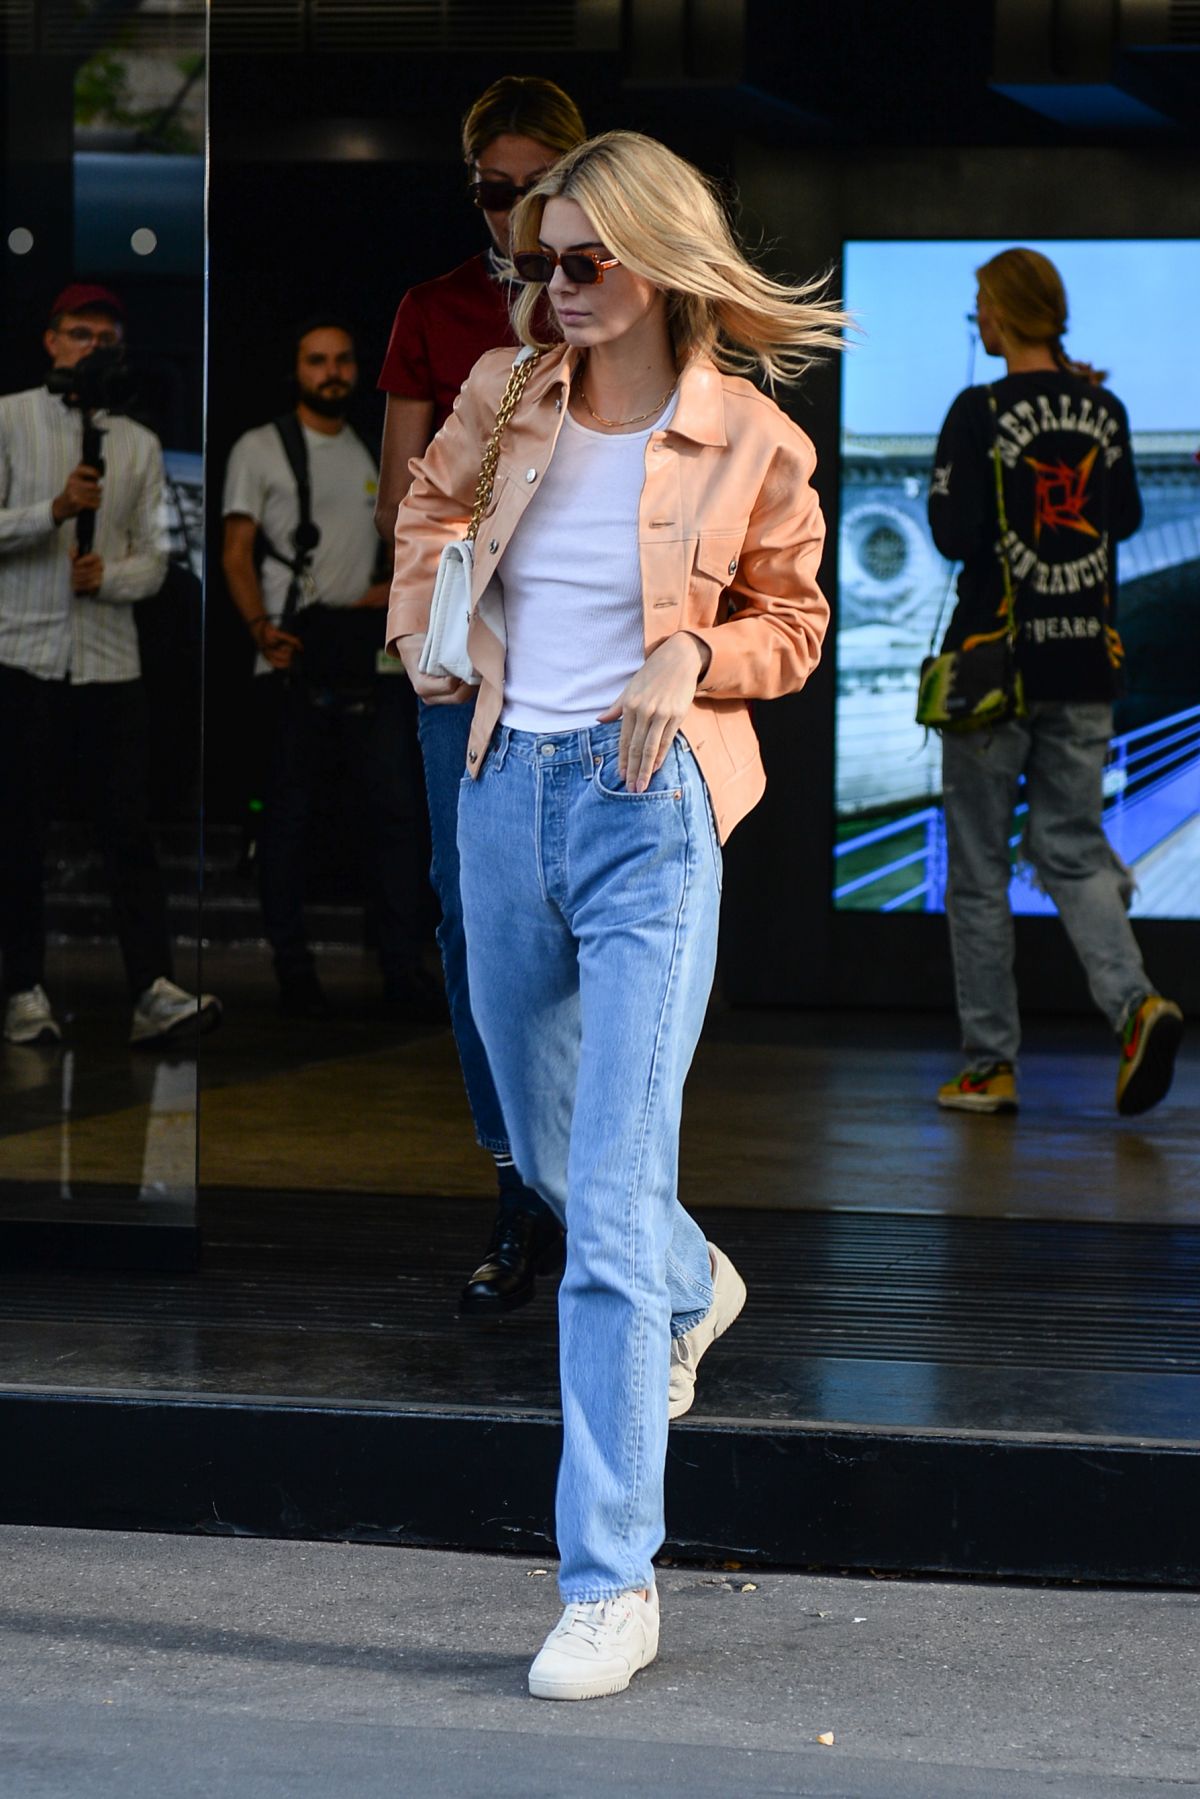 KENDALL JENNER Out at Milan Fashion Week 09/18/2019 – HawtCelebs